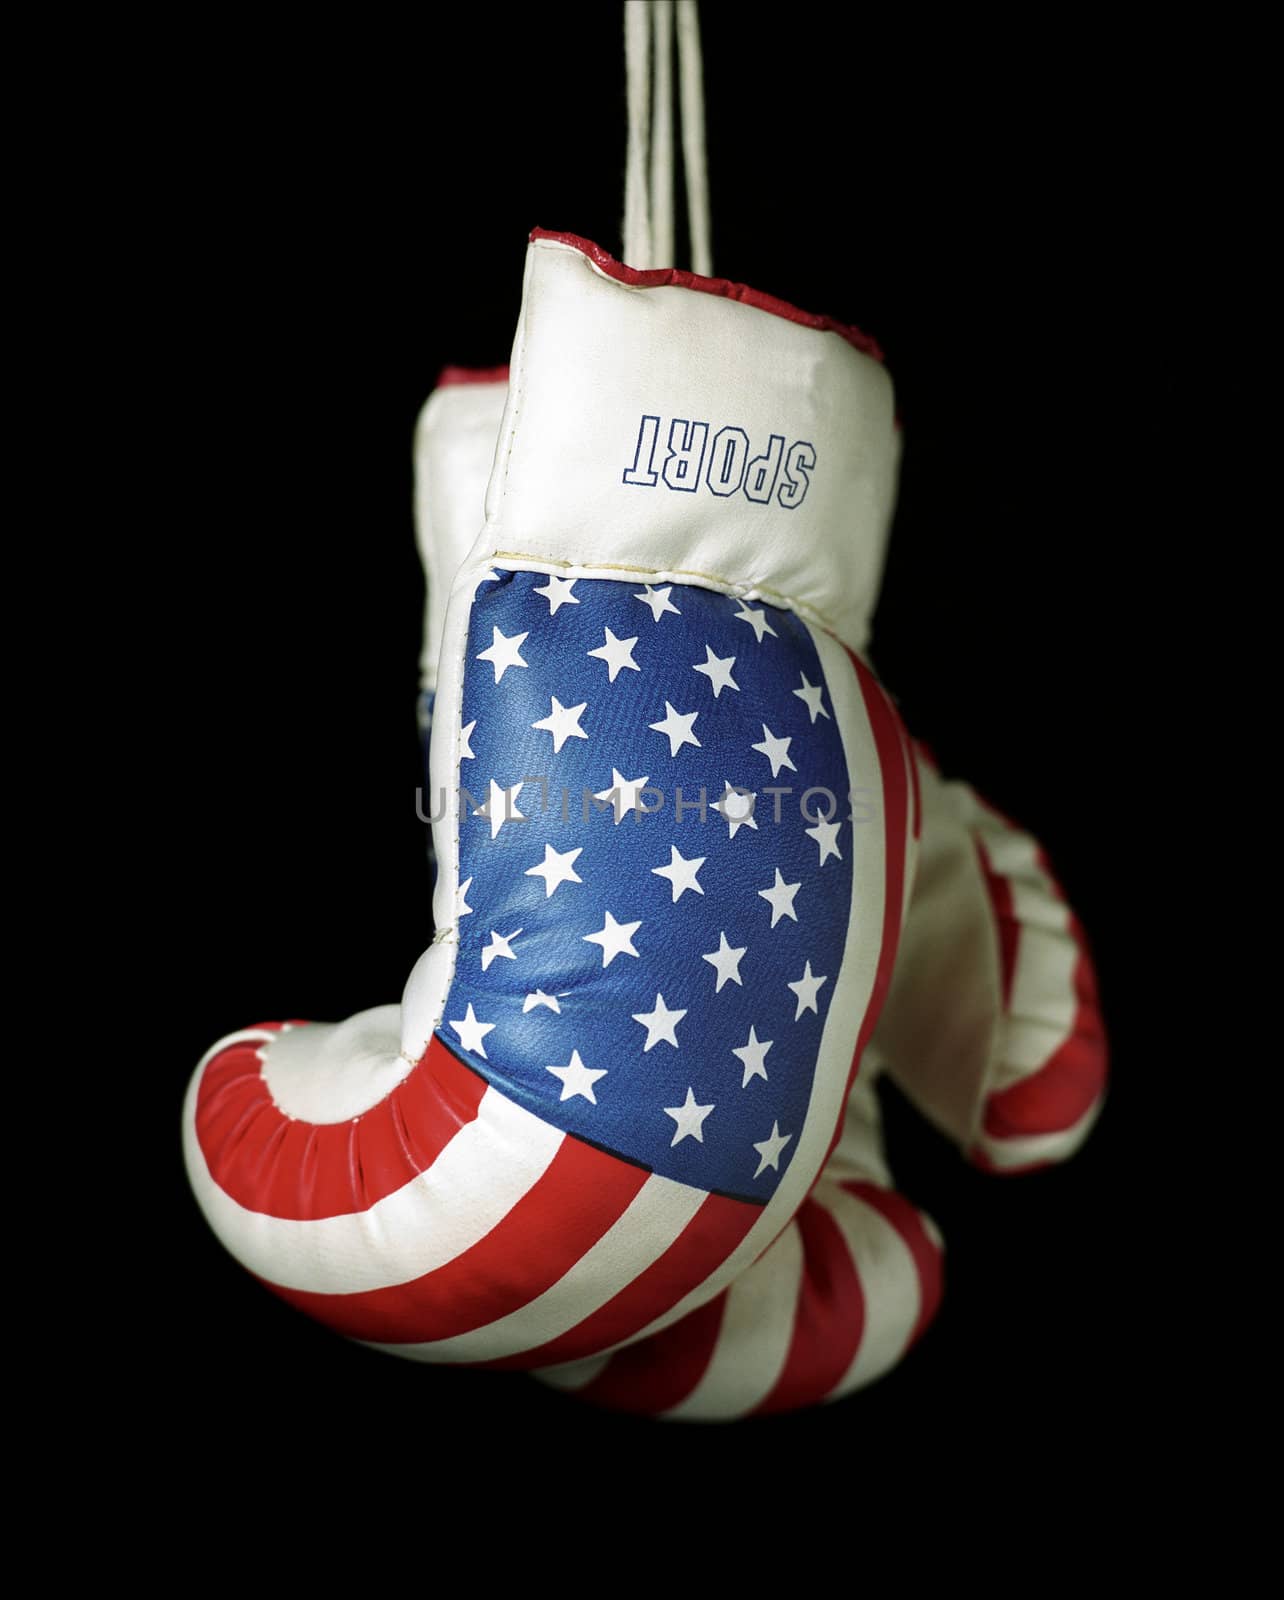 US Boxing Gloves on black background